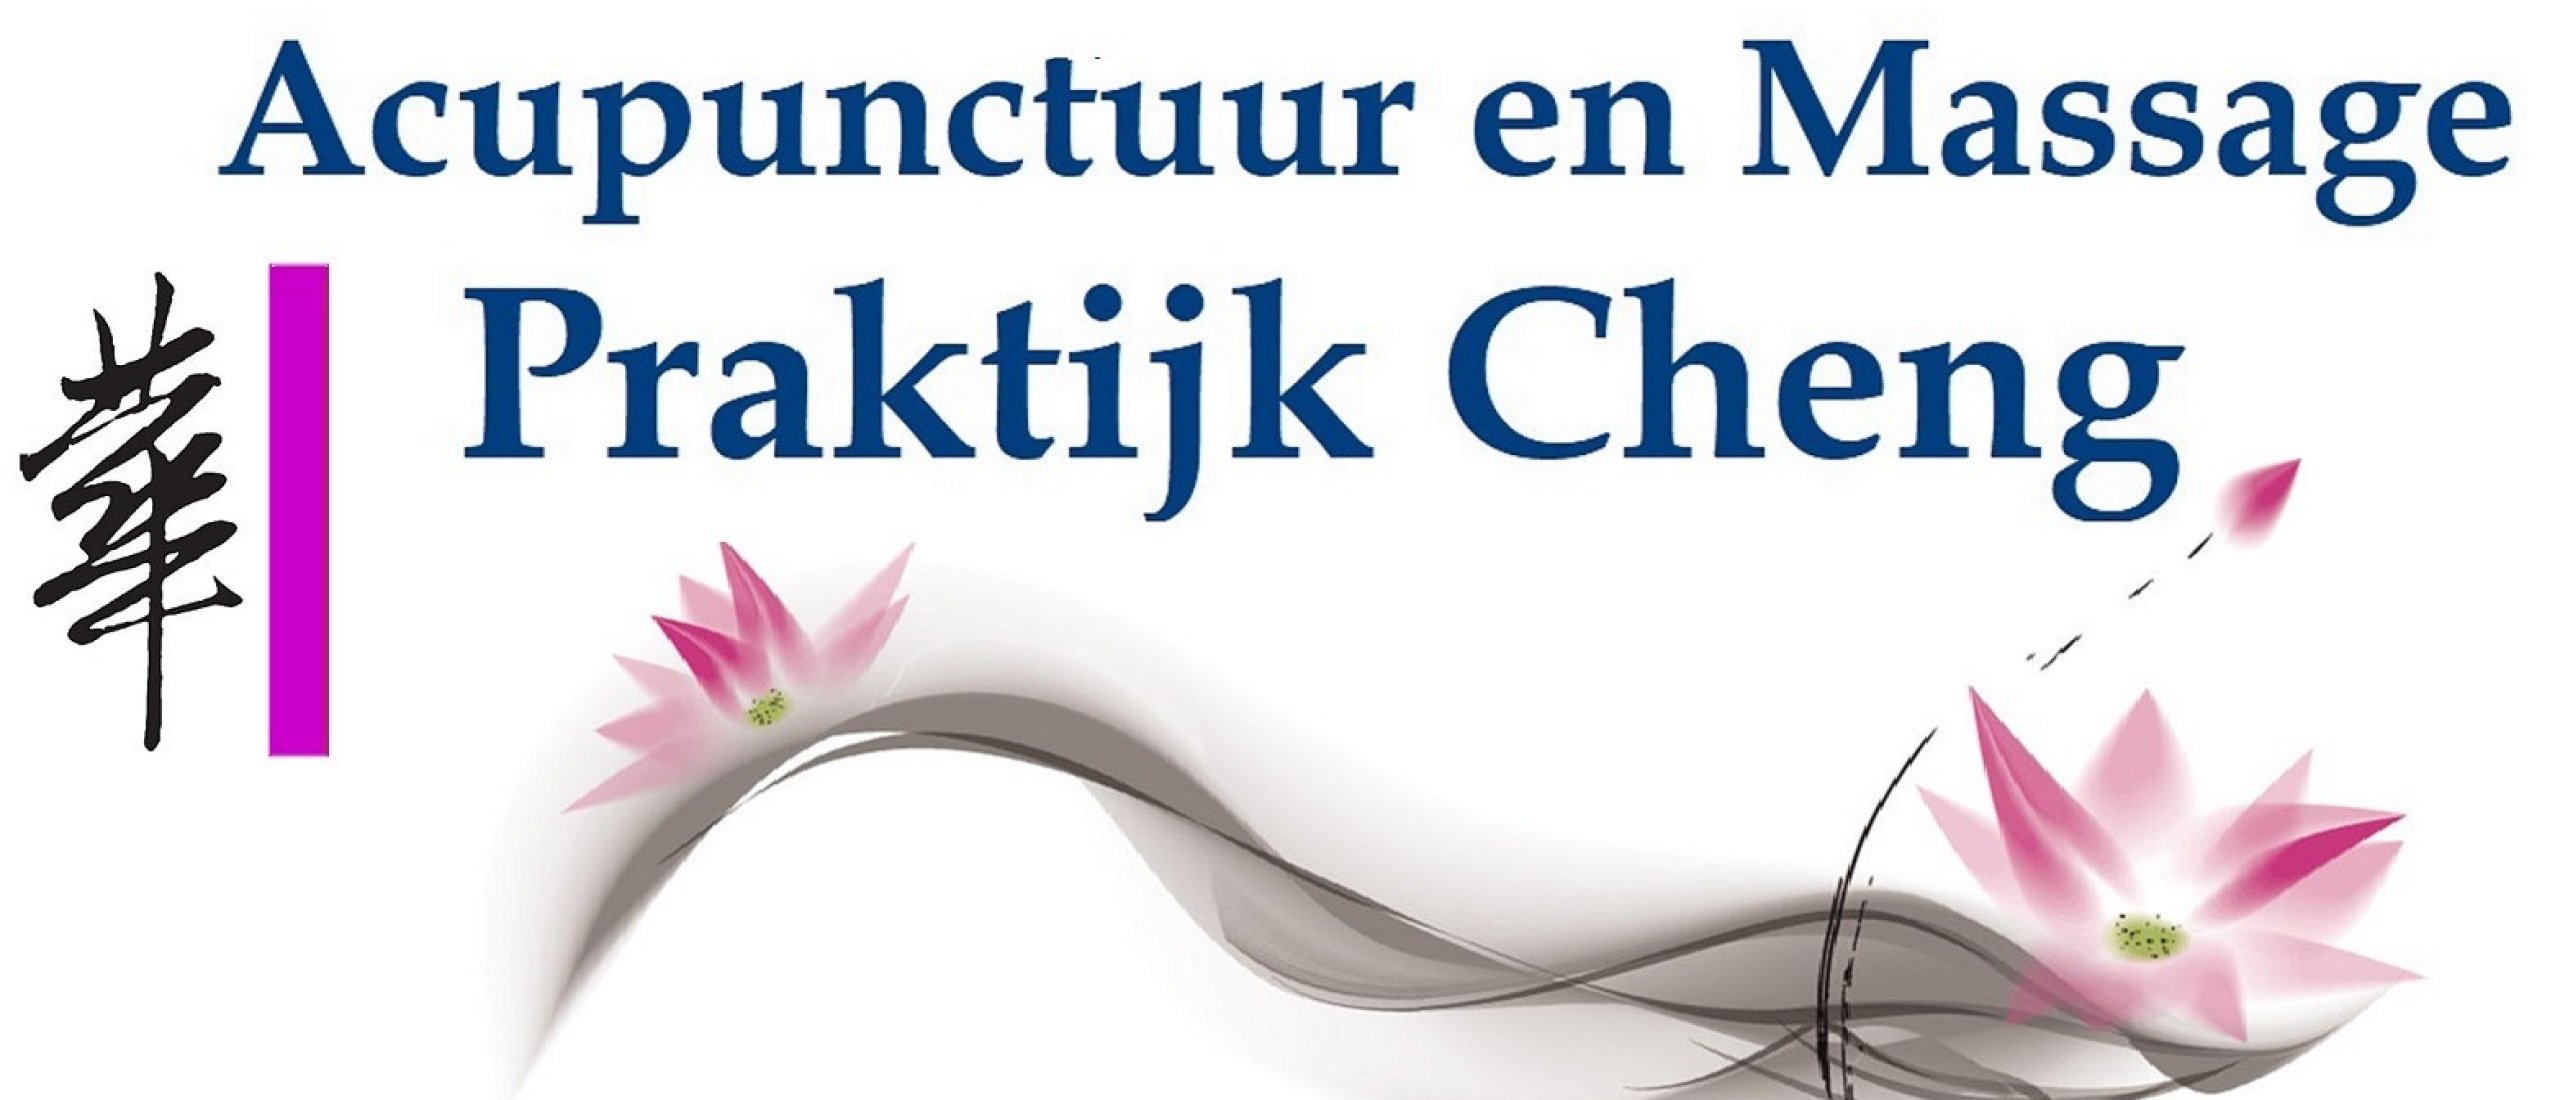 Acupunctuur en Massage Praktijk Cheng